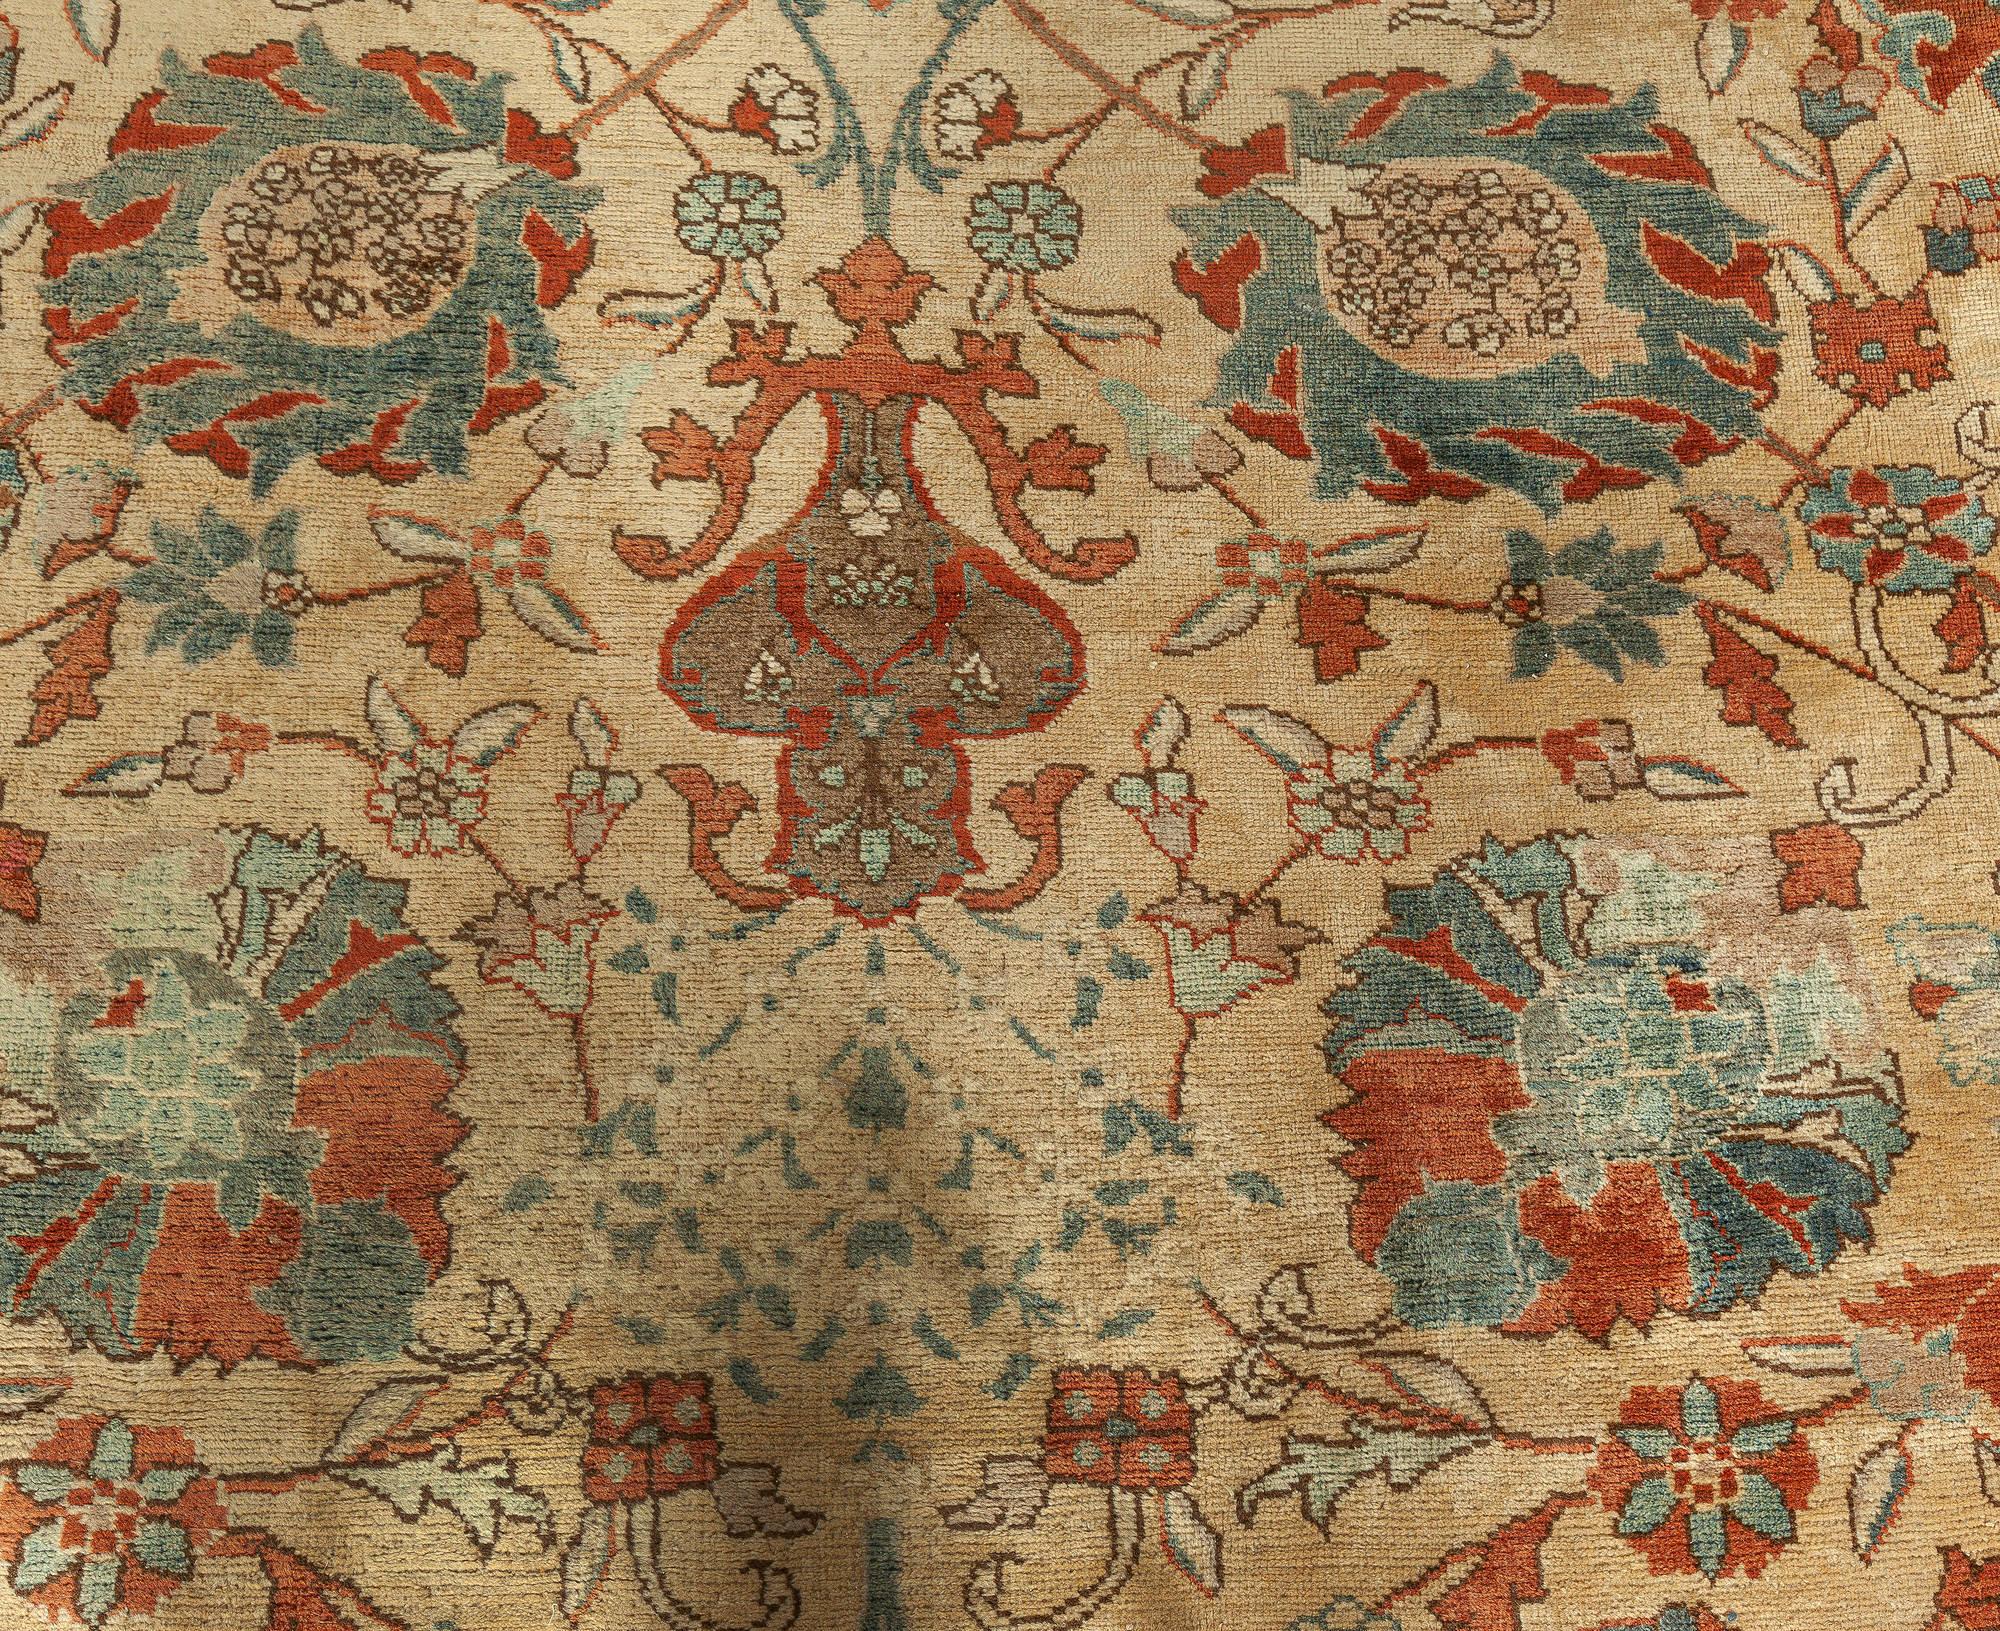 Antique Persian Tabriz Botanic Handmade Wool Rug
Size: 11'10